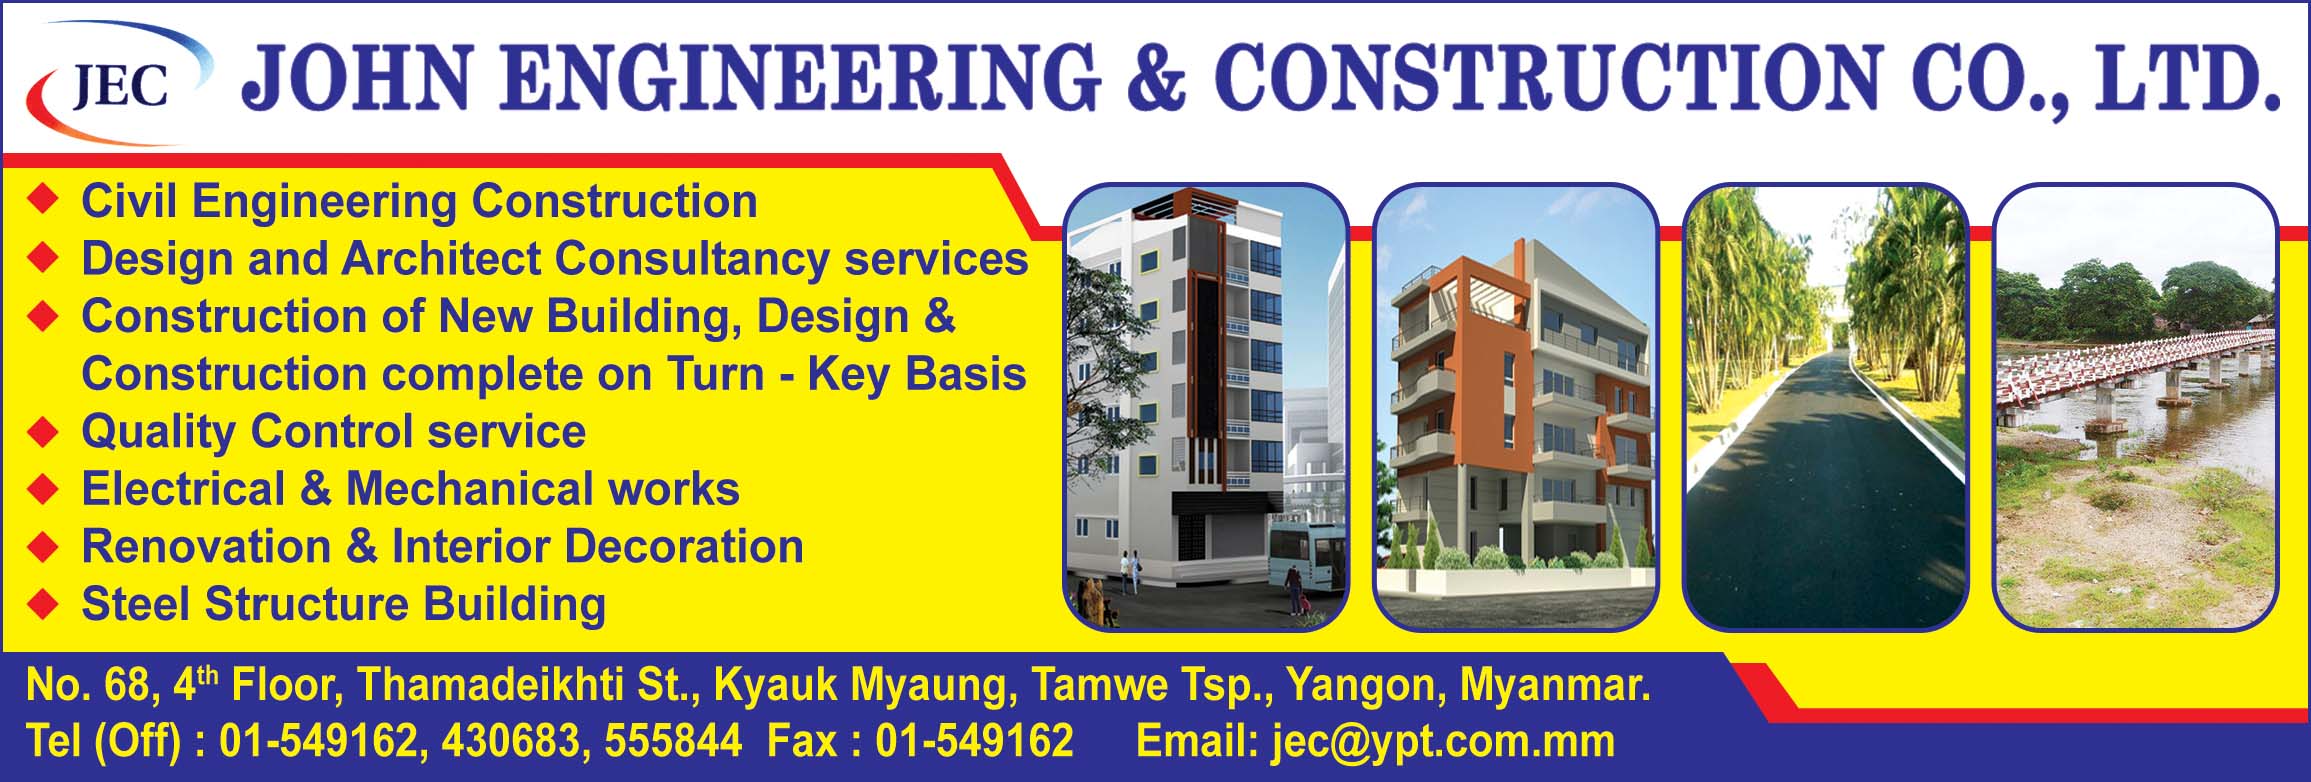 John Engineering and Construction Co., Ltd.